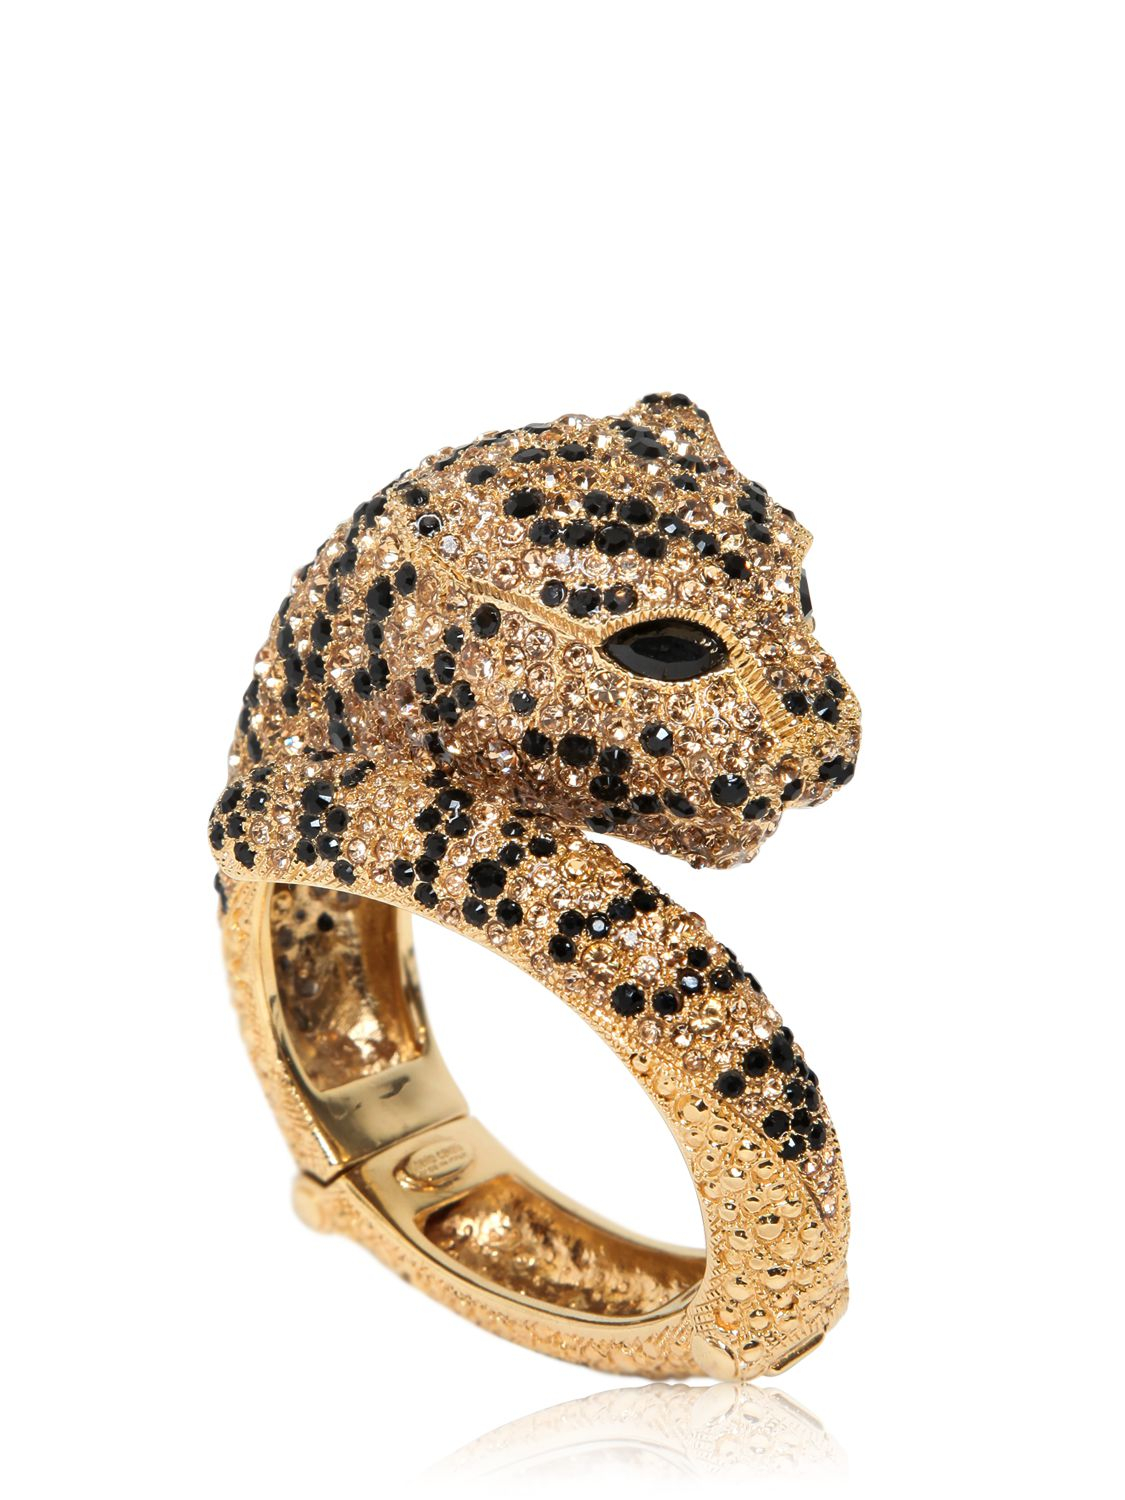 Lyst - Roberto Cavalli Jeweled Panther Cuff Bracelet in Metallic